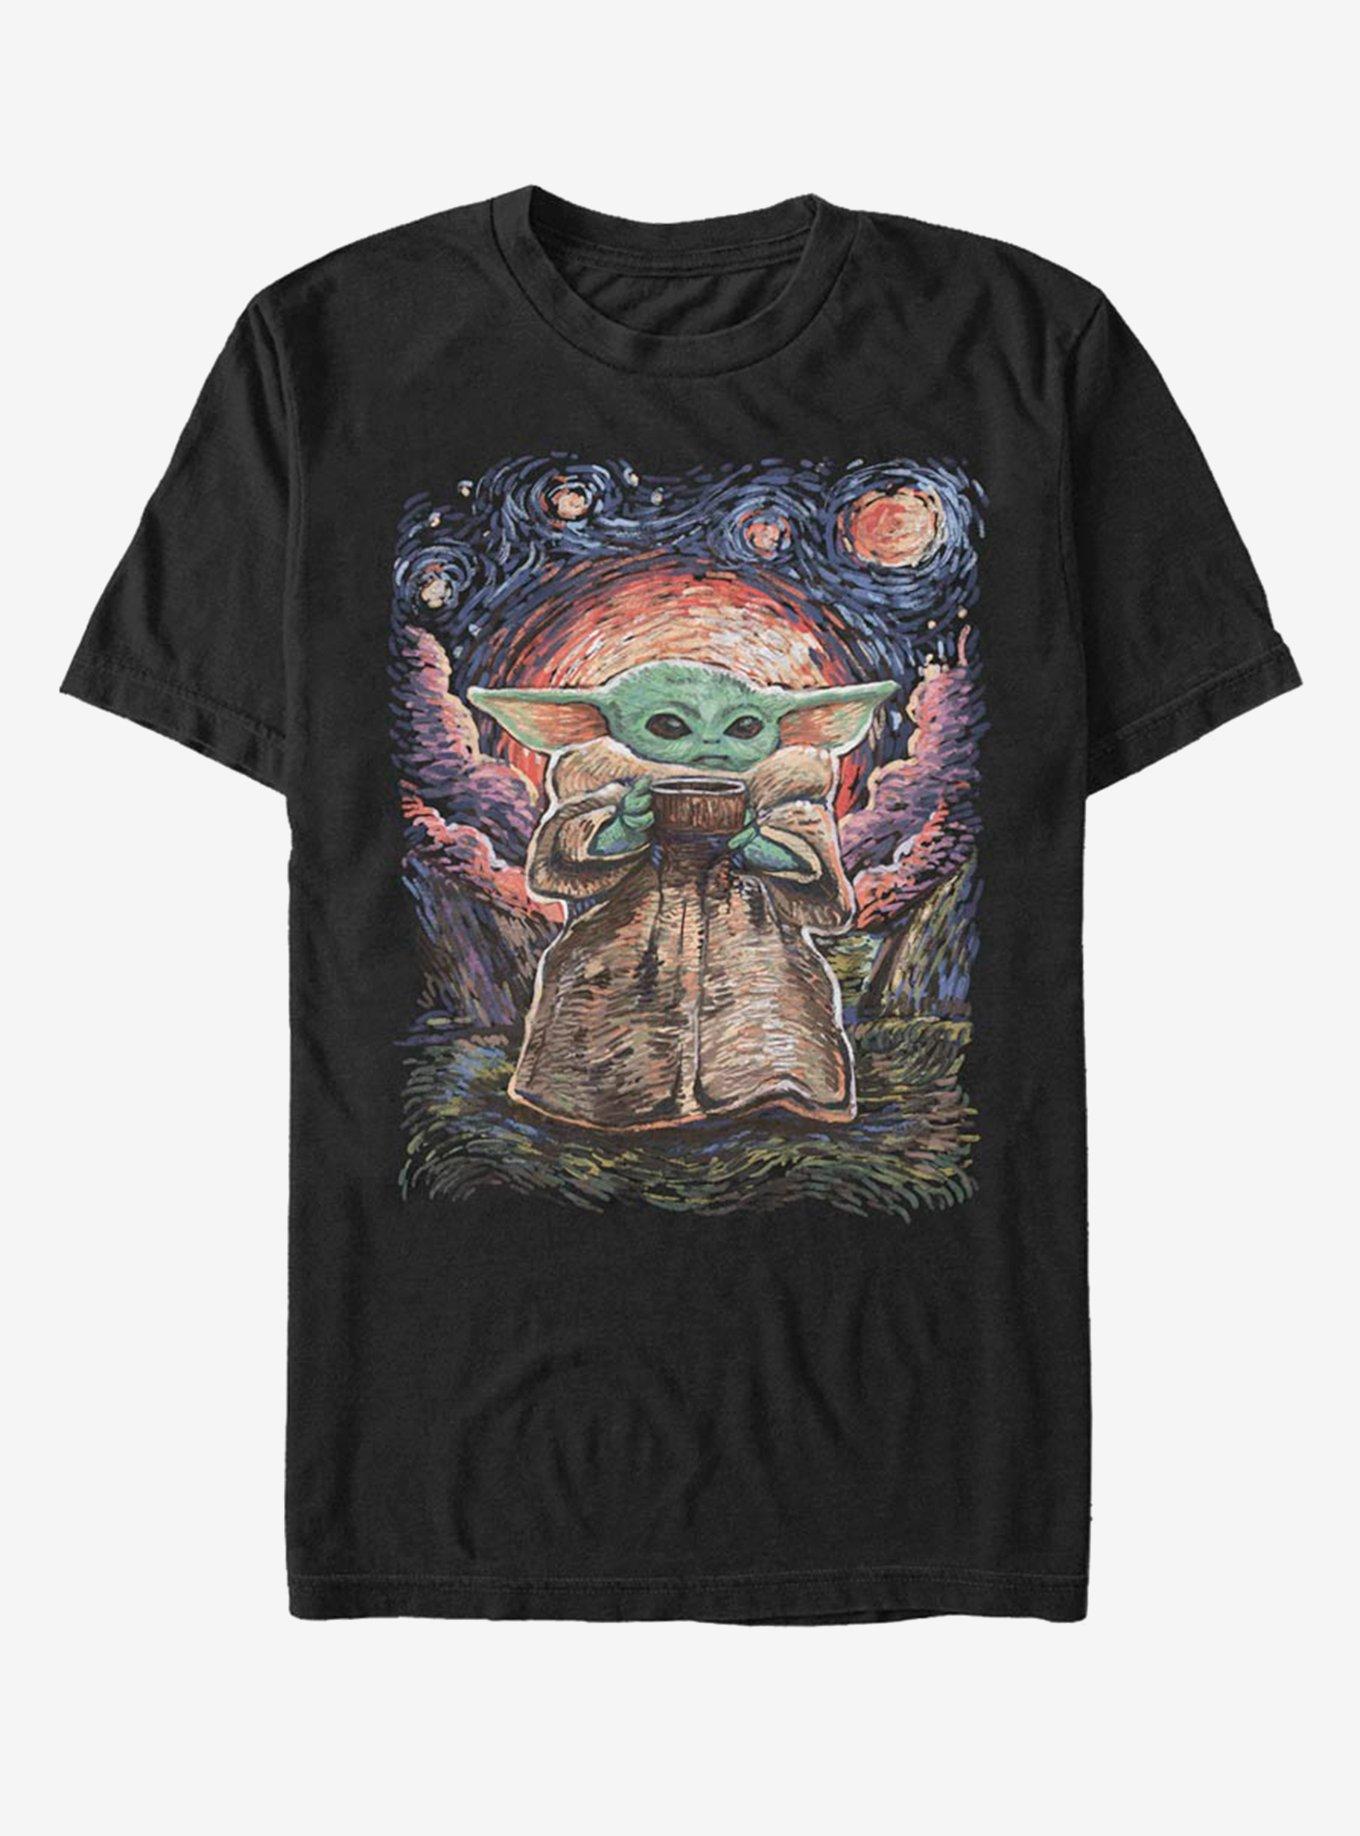 Topic Starry Night Wars The Hot Star The Mandalorian T-Shirt | Child